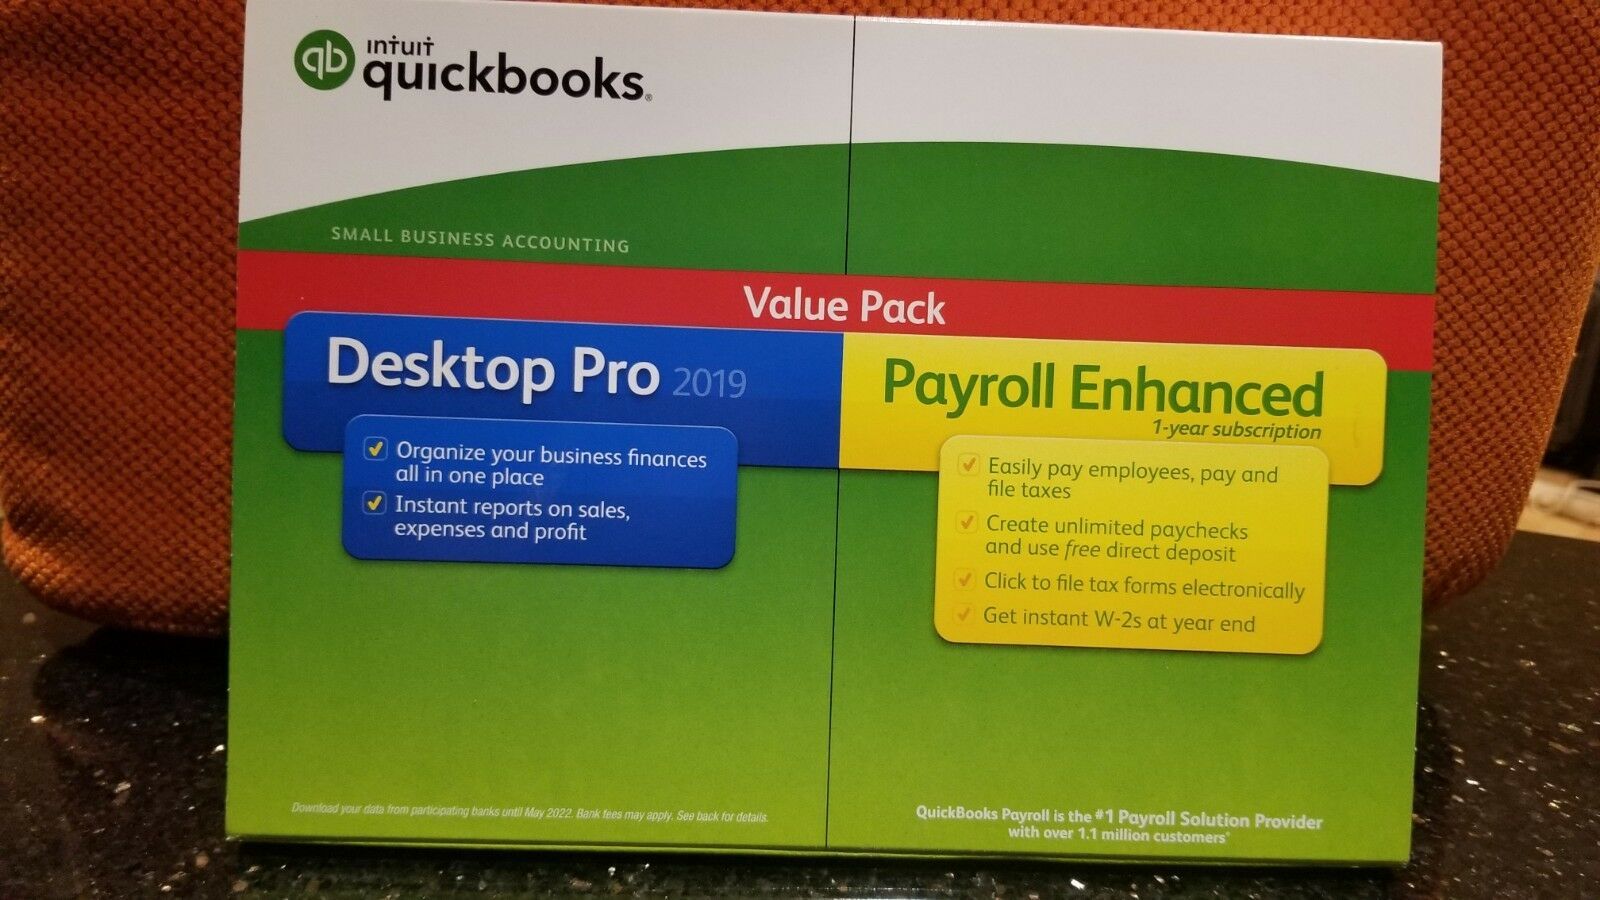 download quickbooks pro desktop 2019